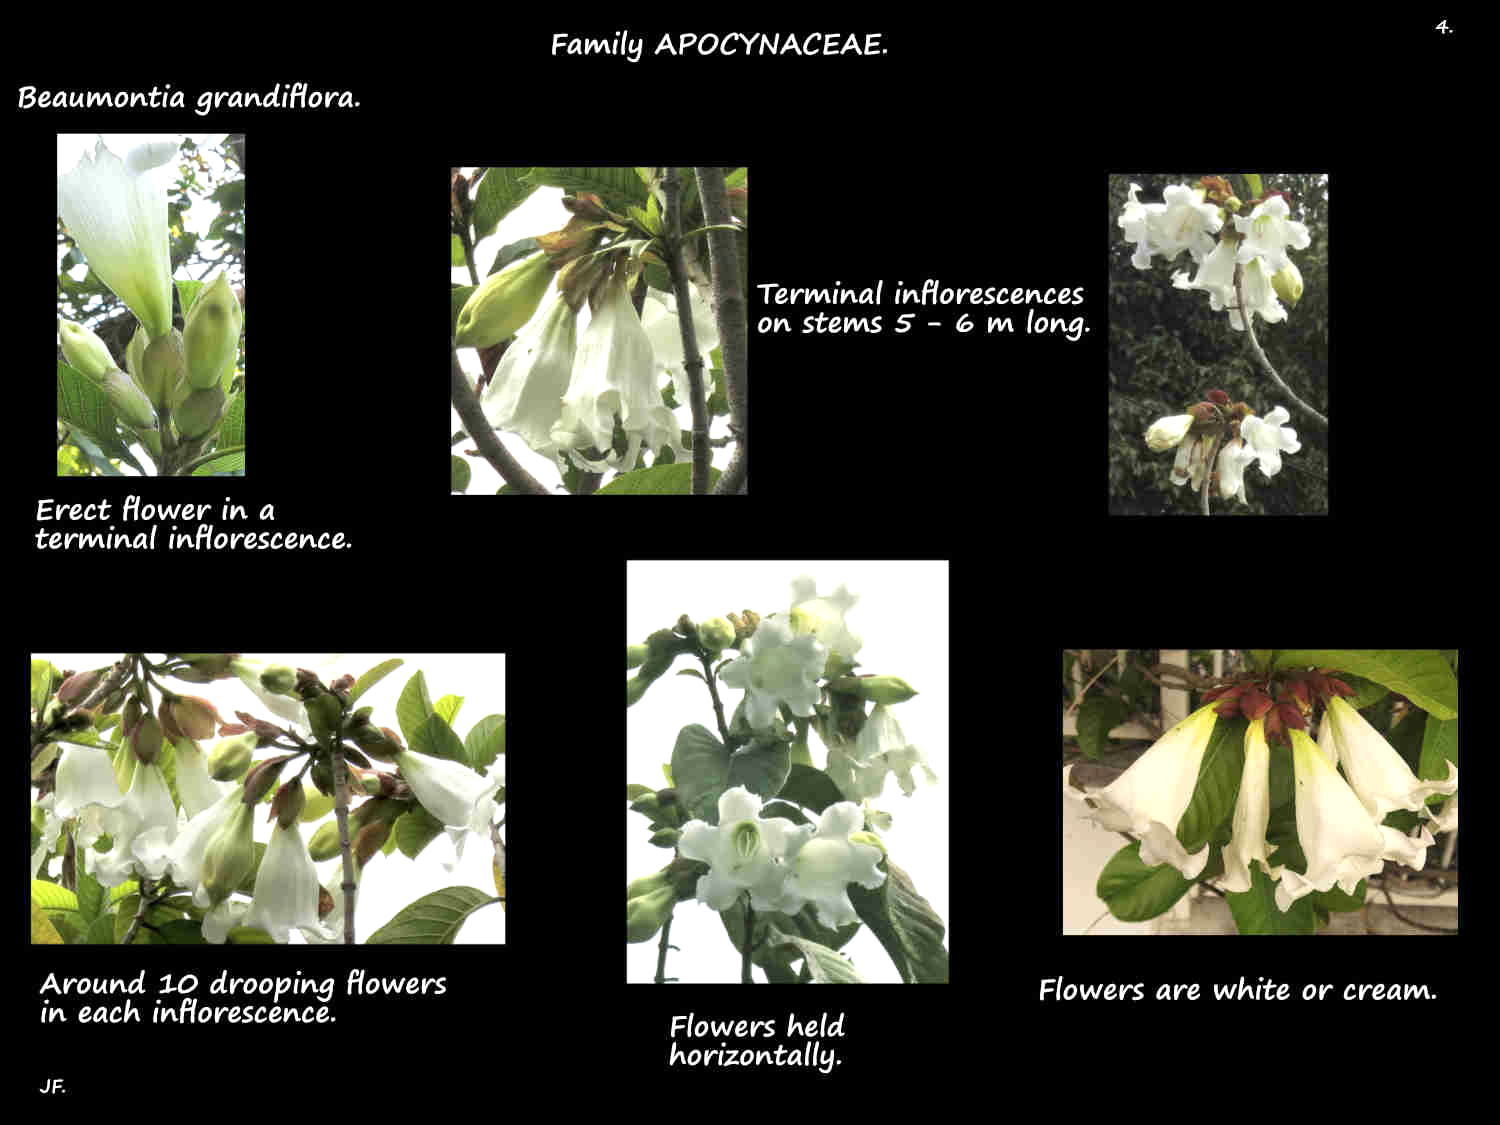 4 Easter Lily vine inflorescences